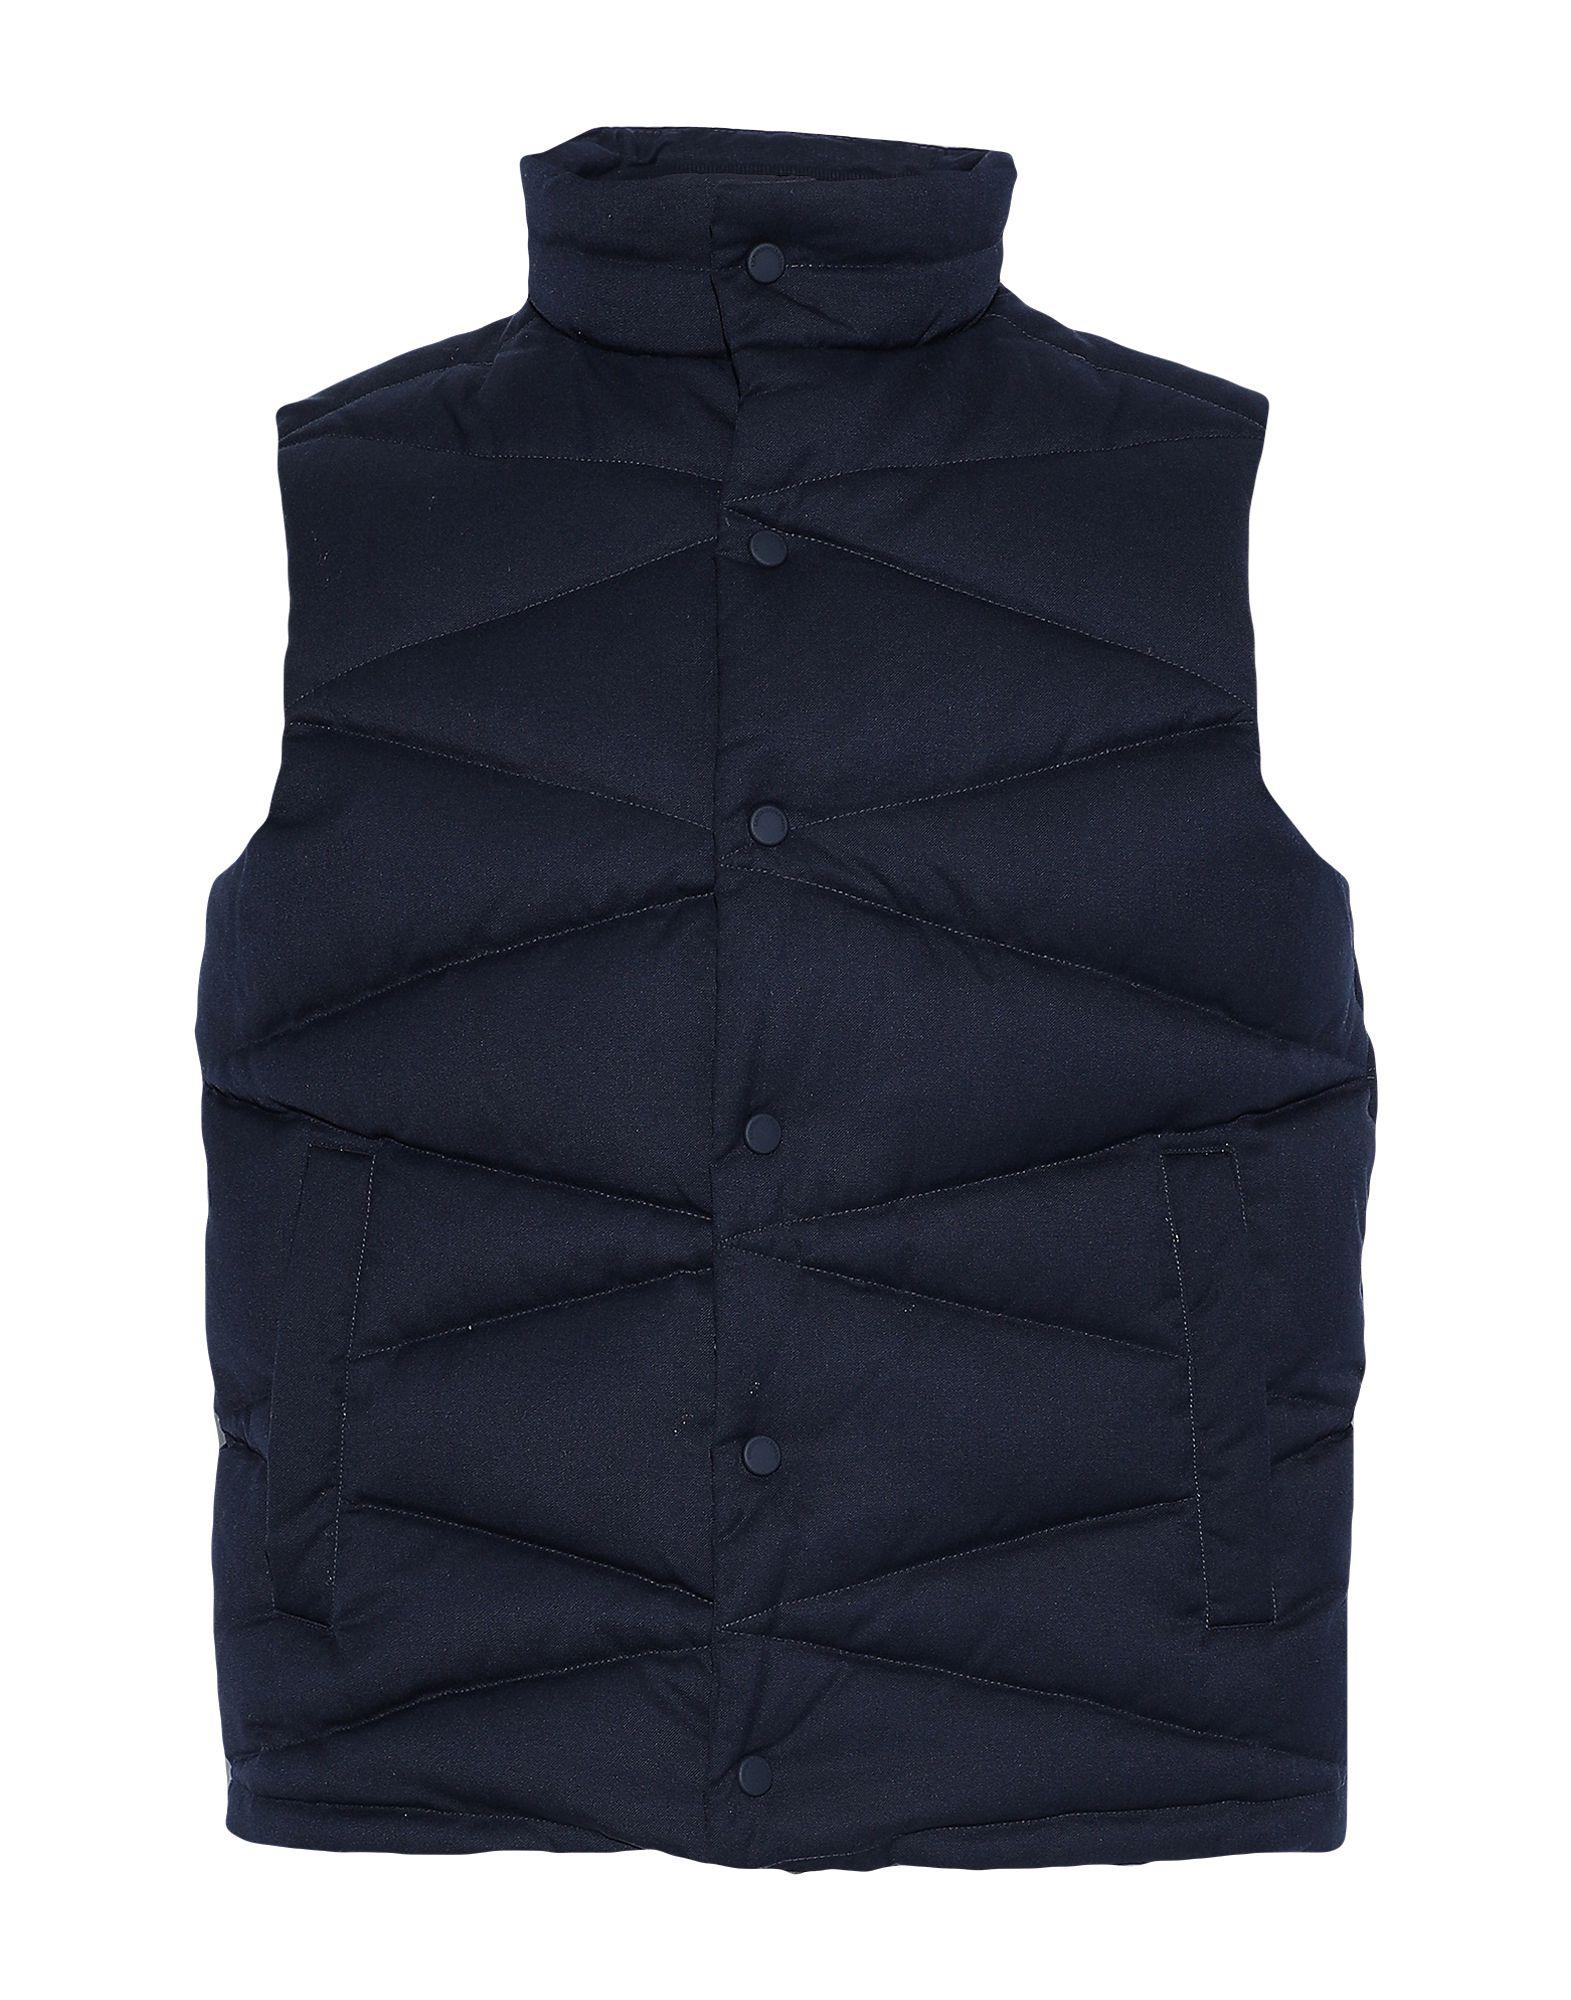 Emporio Armani Wool Down Jacket in Dark Blue (Blue) for Men - Lyst